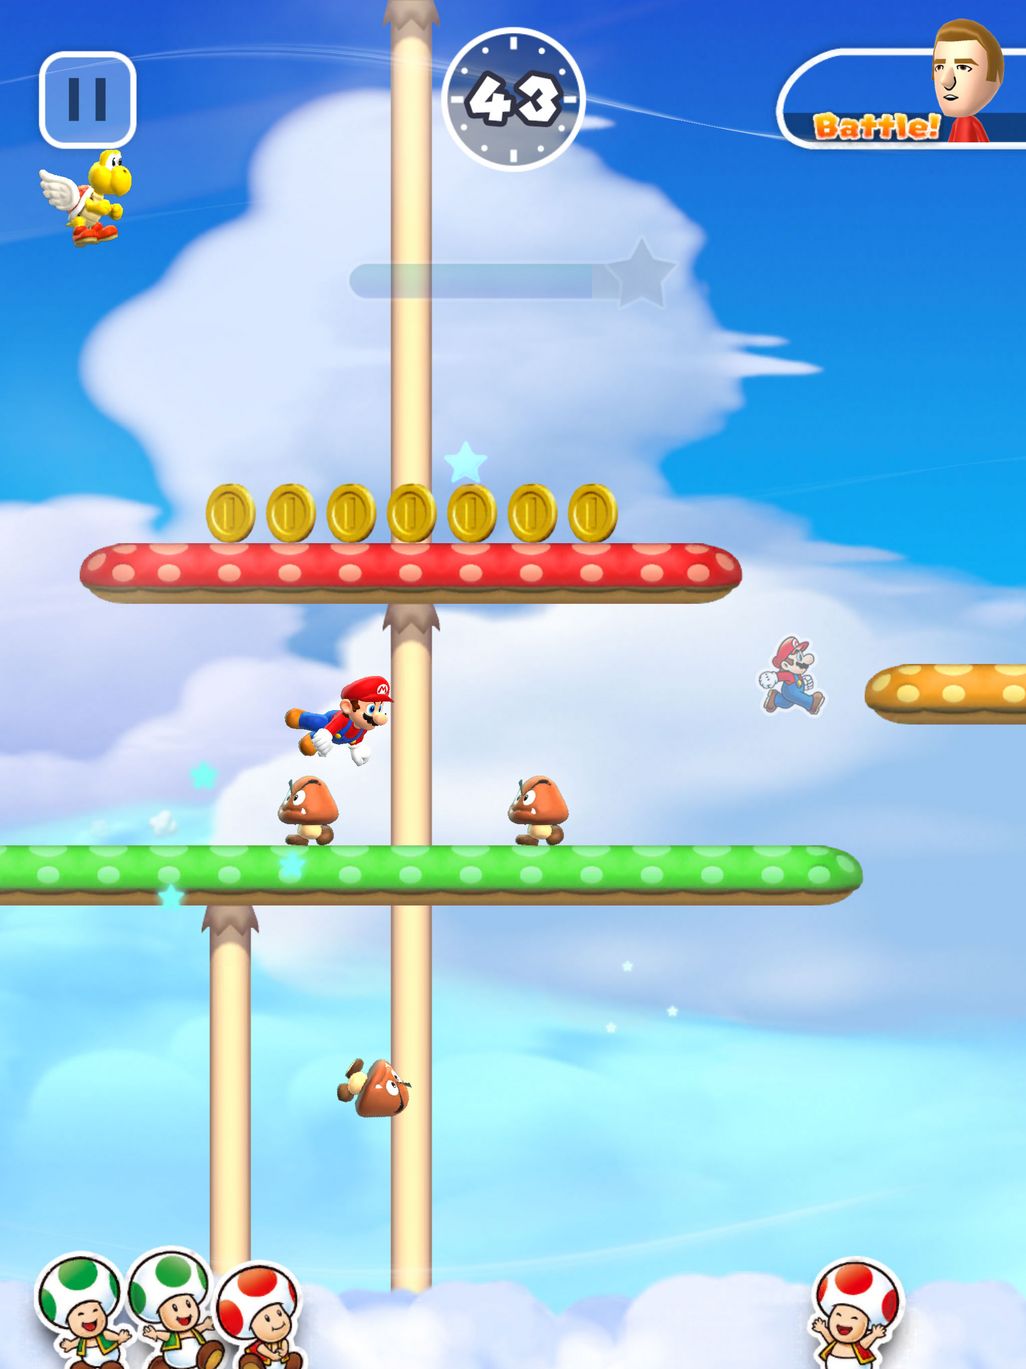 Ein Screenshot aus "Super Mario Run"